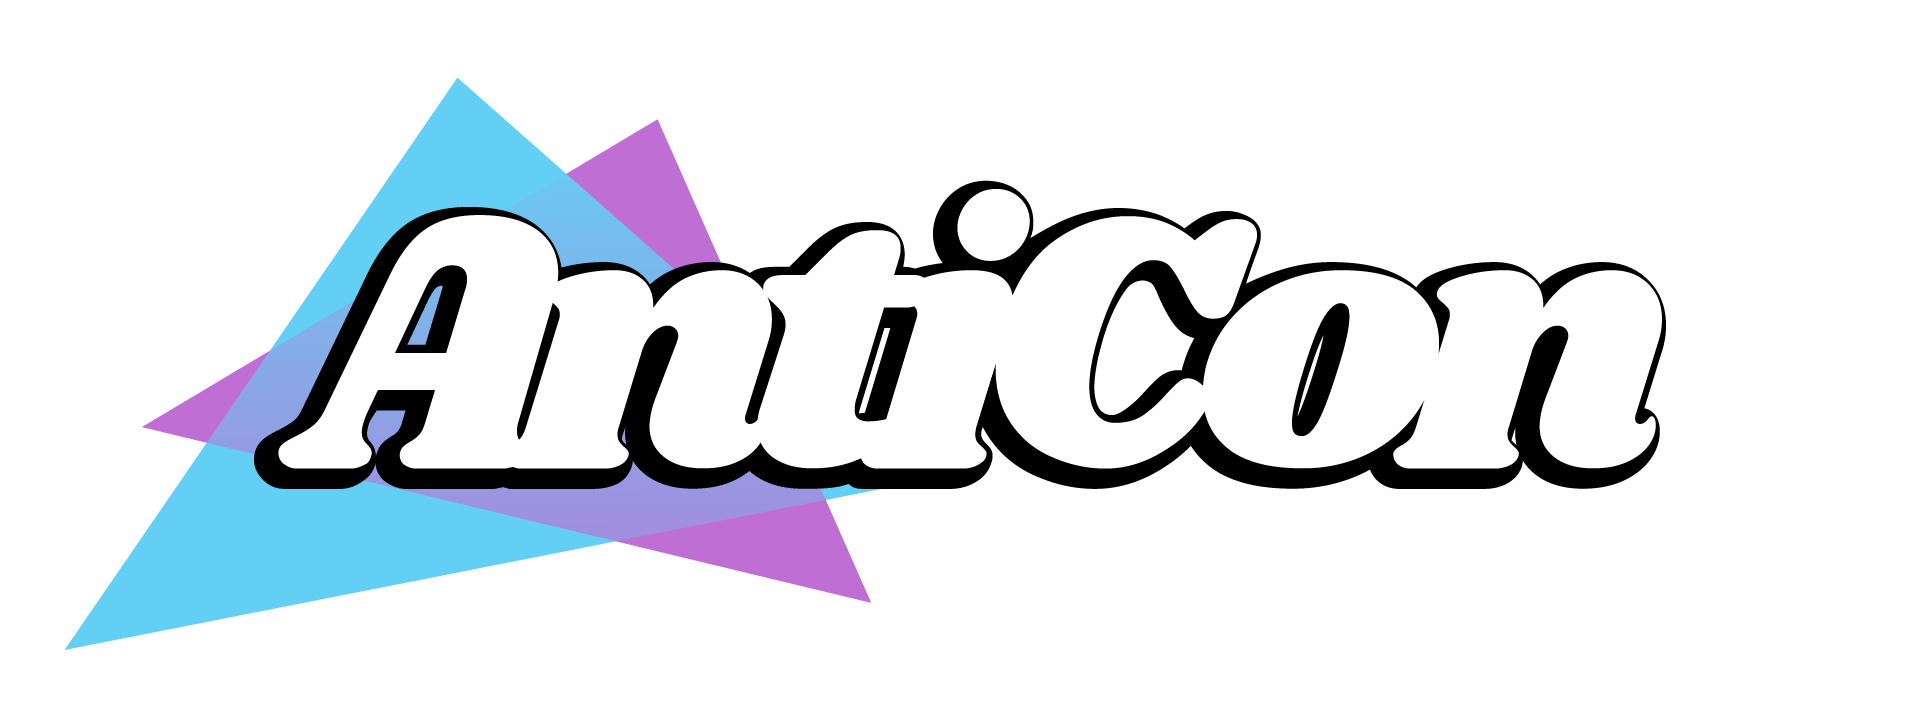 1.0_AntiCon-Logo-3